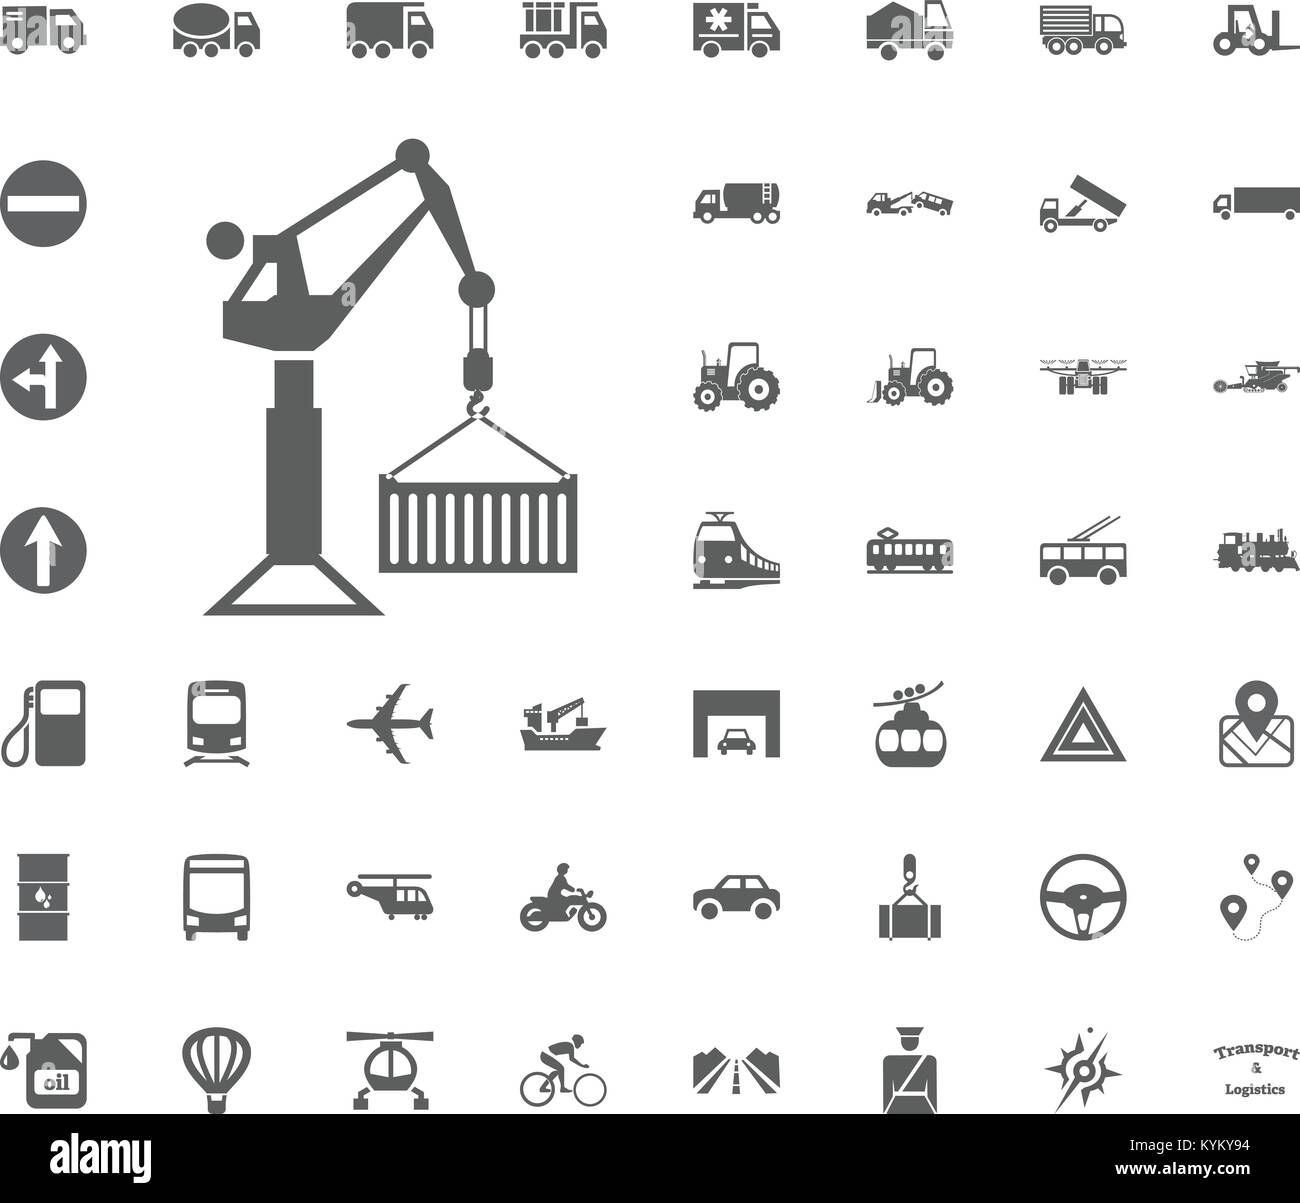 Crane icon. Transport and Logistics set icons. Transportation set icons. Stock Vector